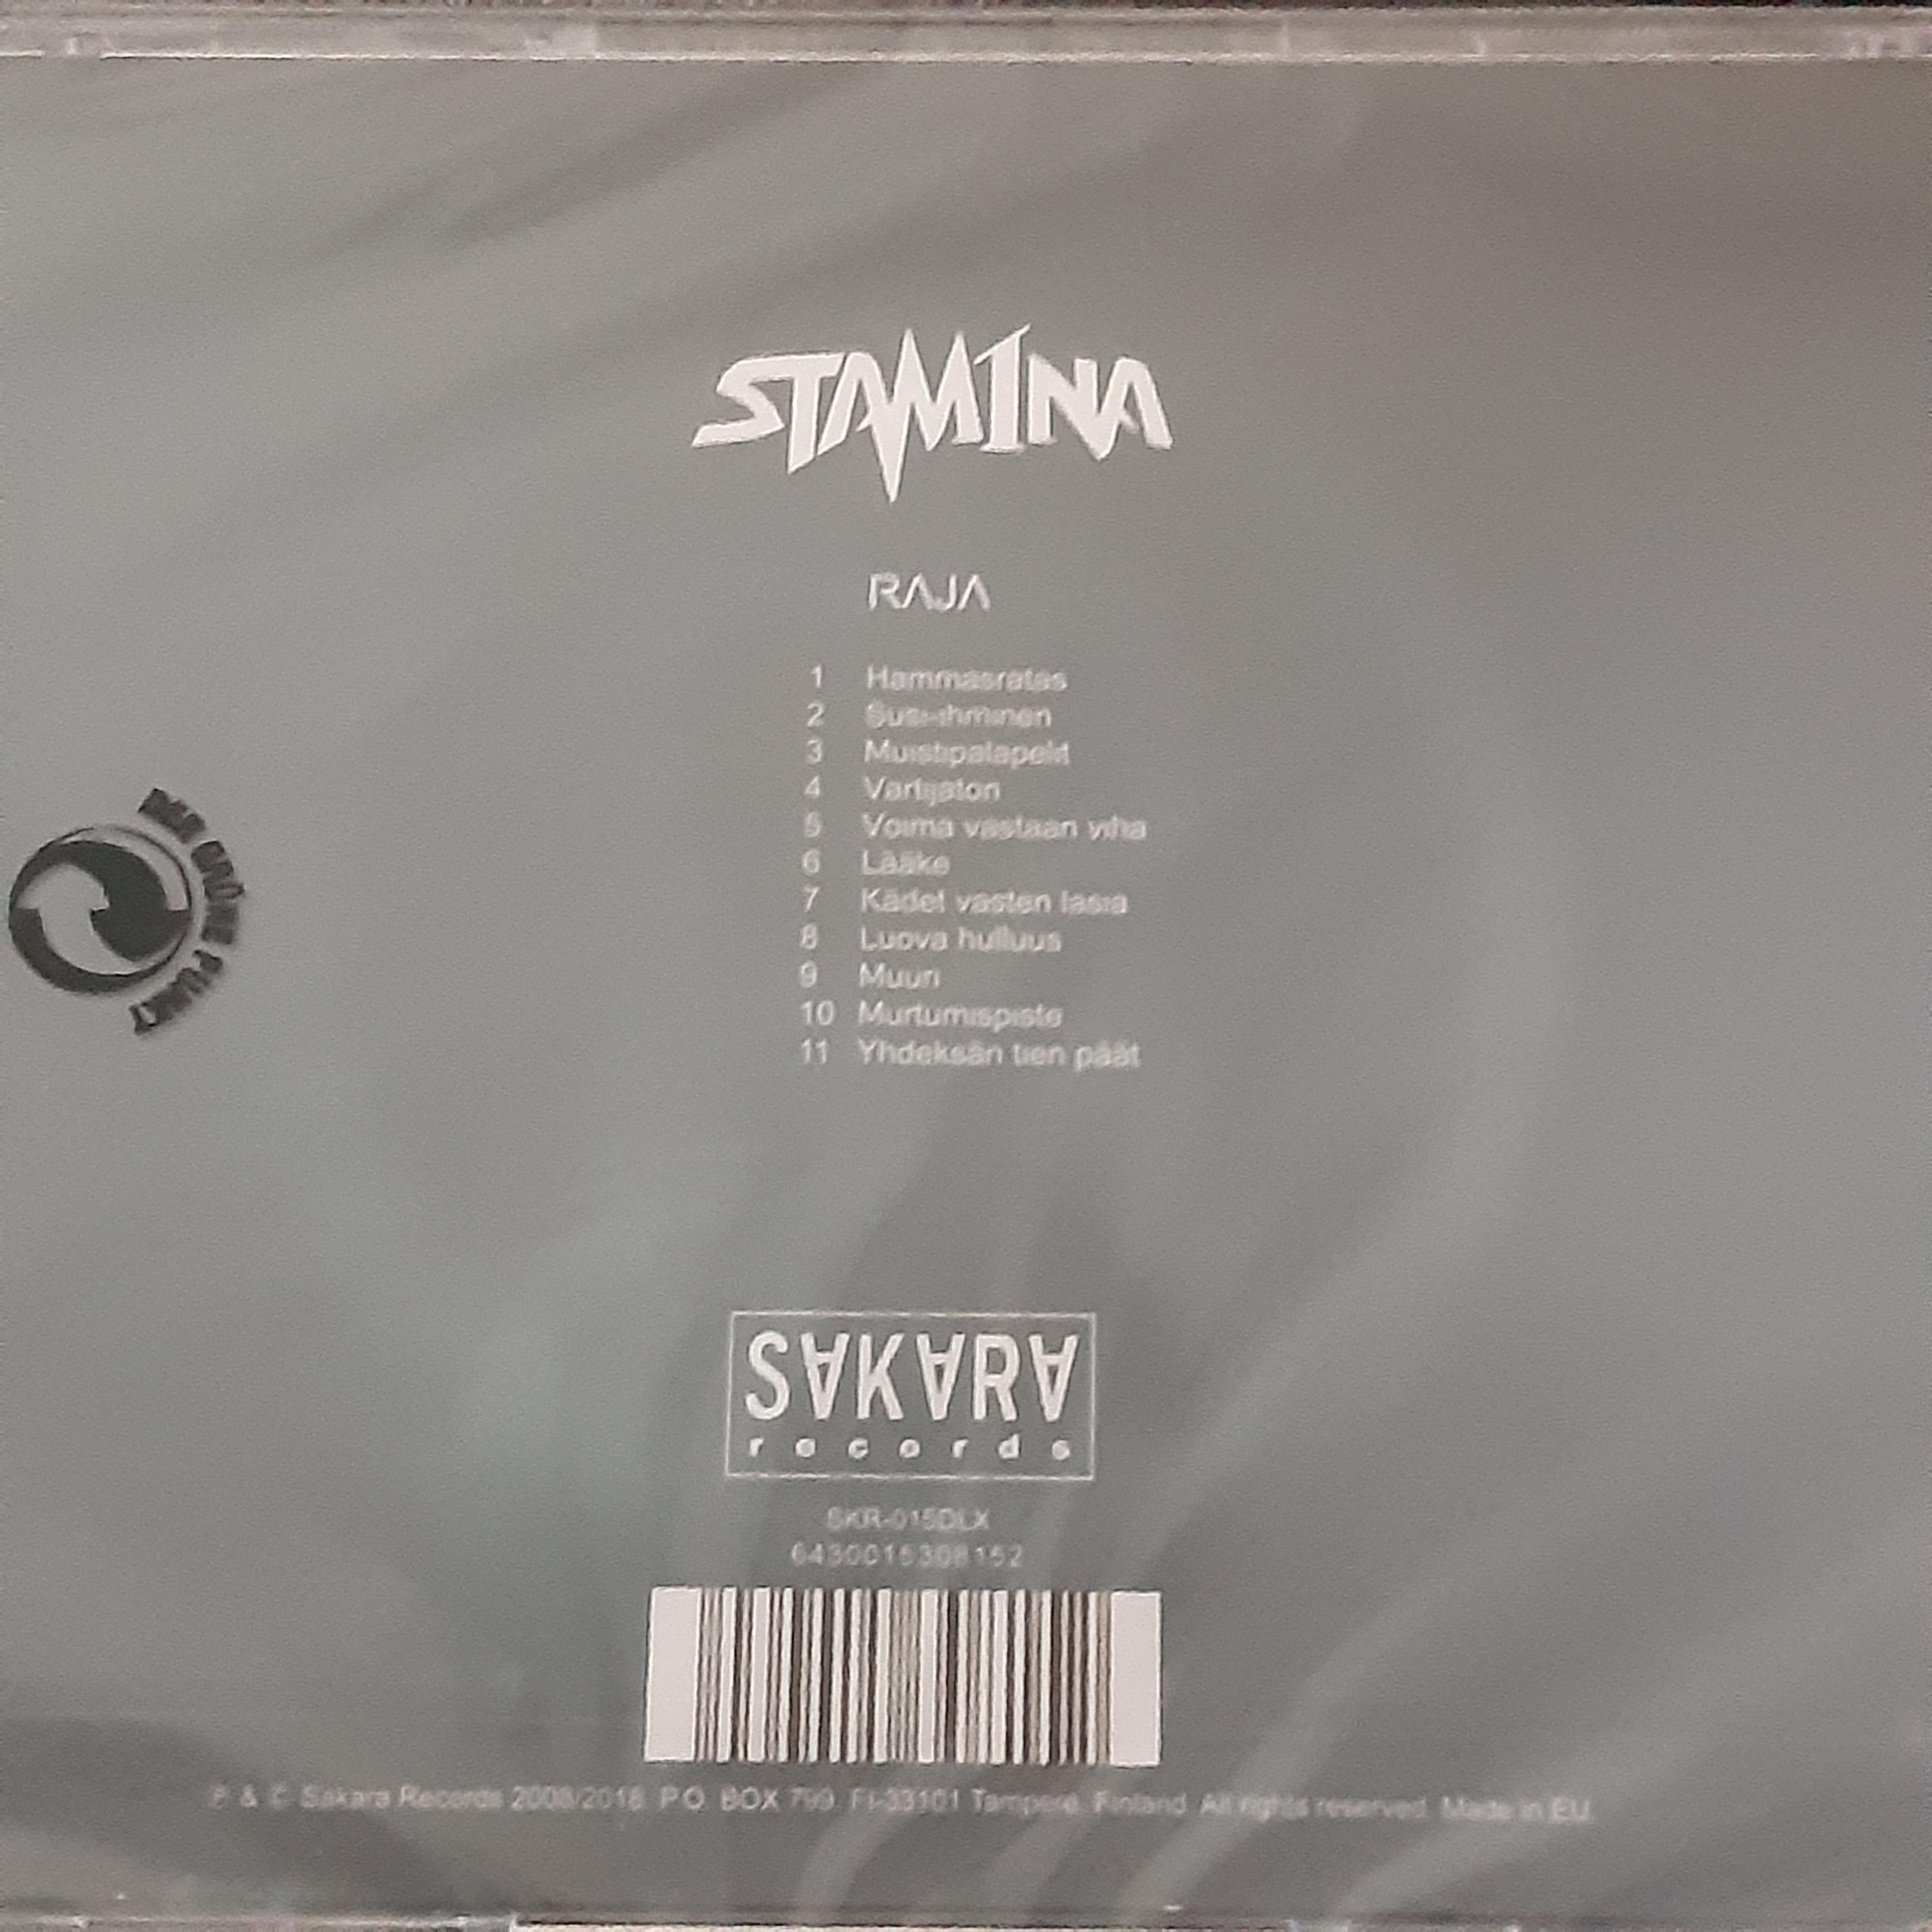 Stam1na - Raja - CD (uusi)